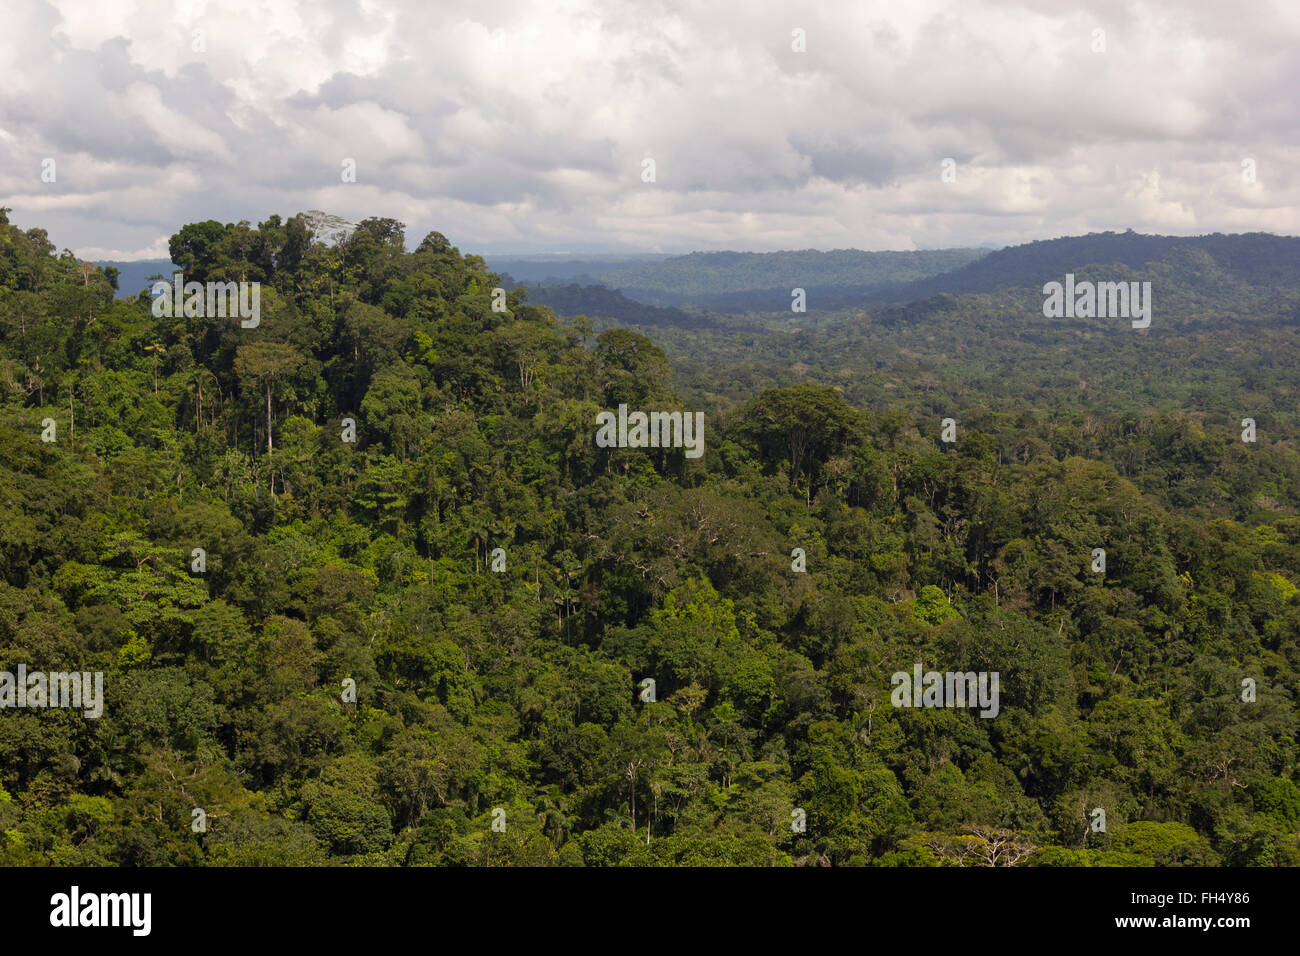 View overlooking primary Amazonian rainforest in Pastaza province, Ecuador Stock Photo